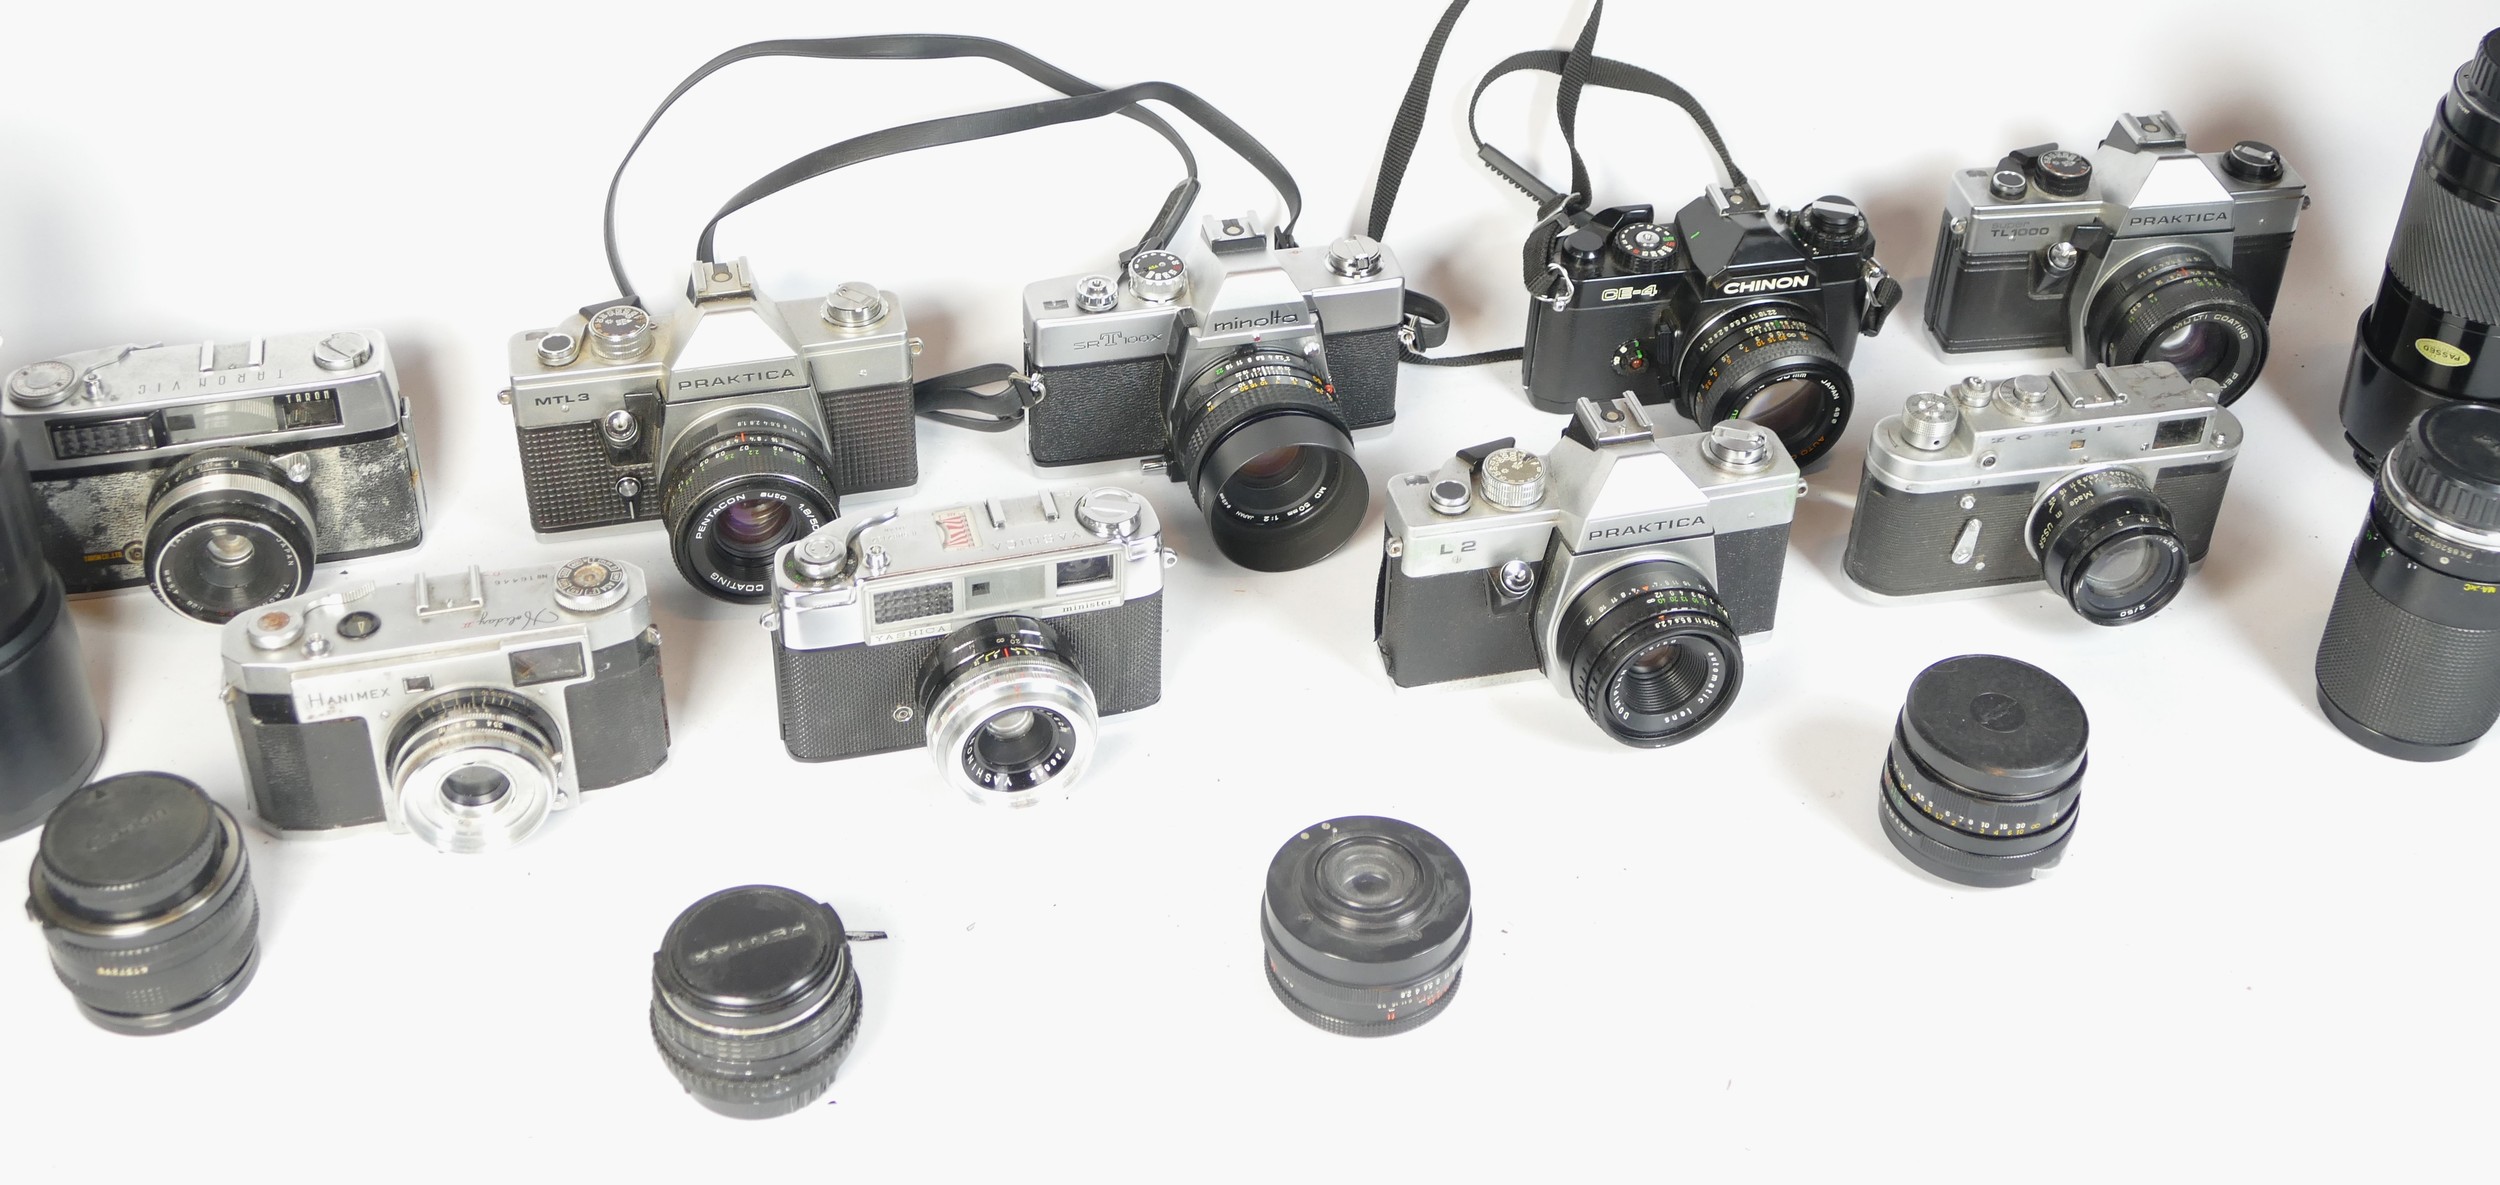 Nine SLR vintage film cameras to include a Chinon CE-4, a Praktica TL1000, a Hanimex Holiday II - Image 2 of 2